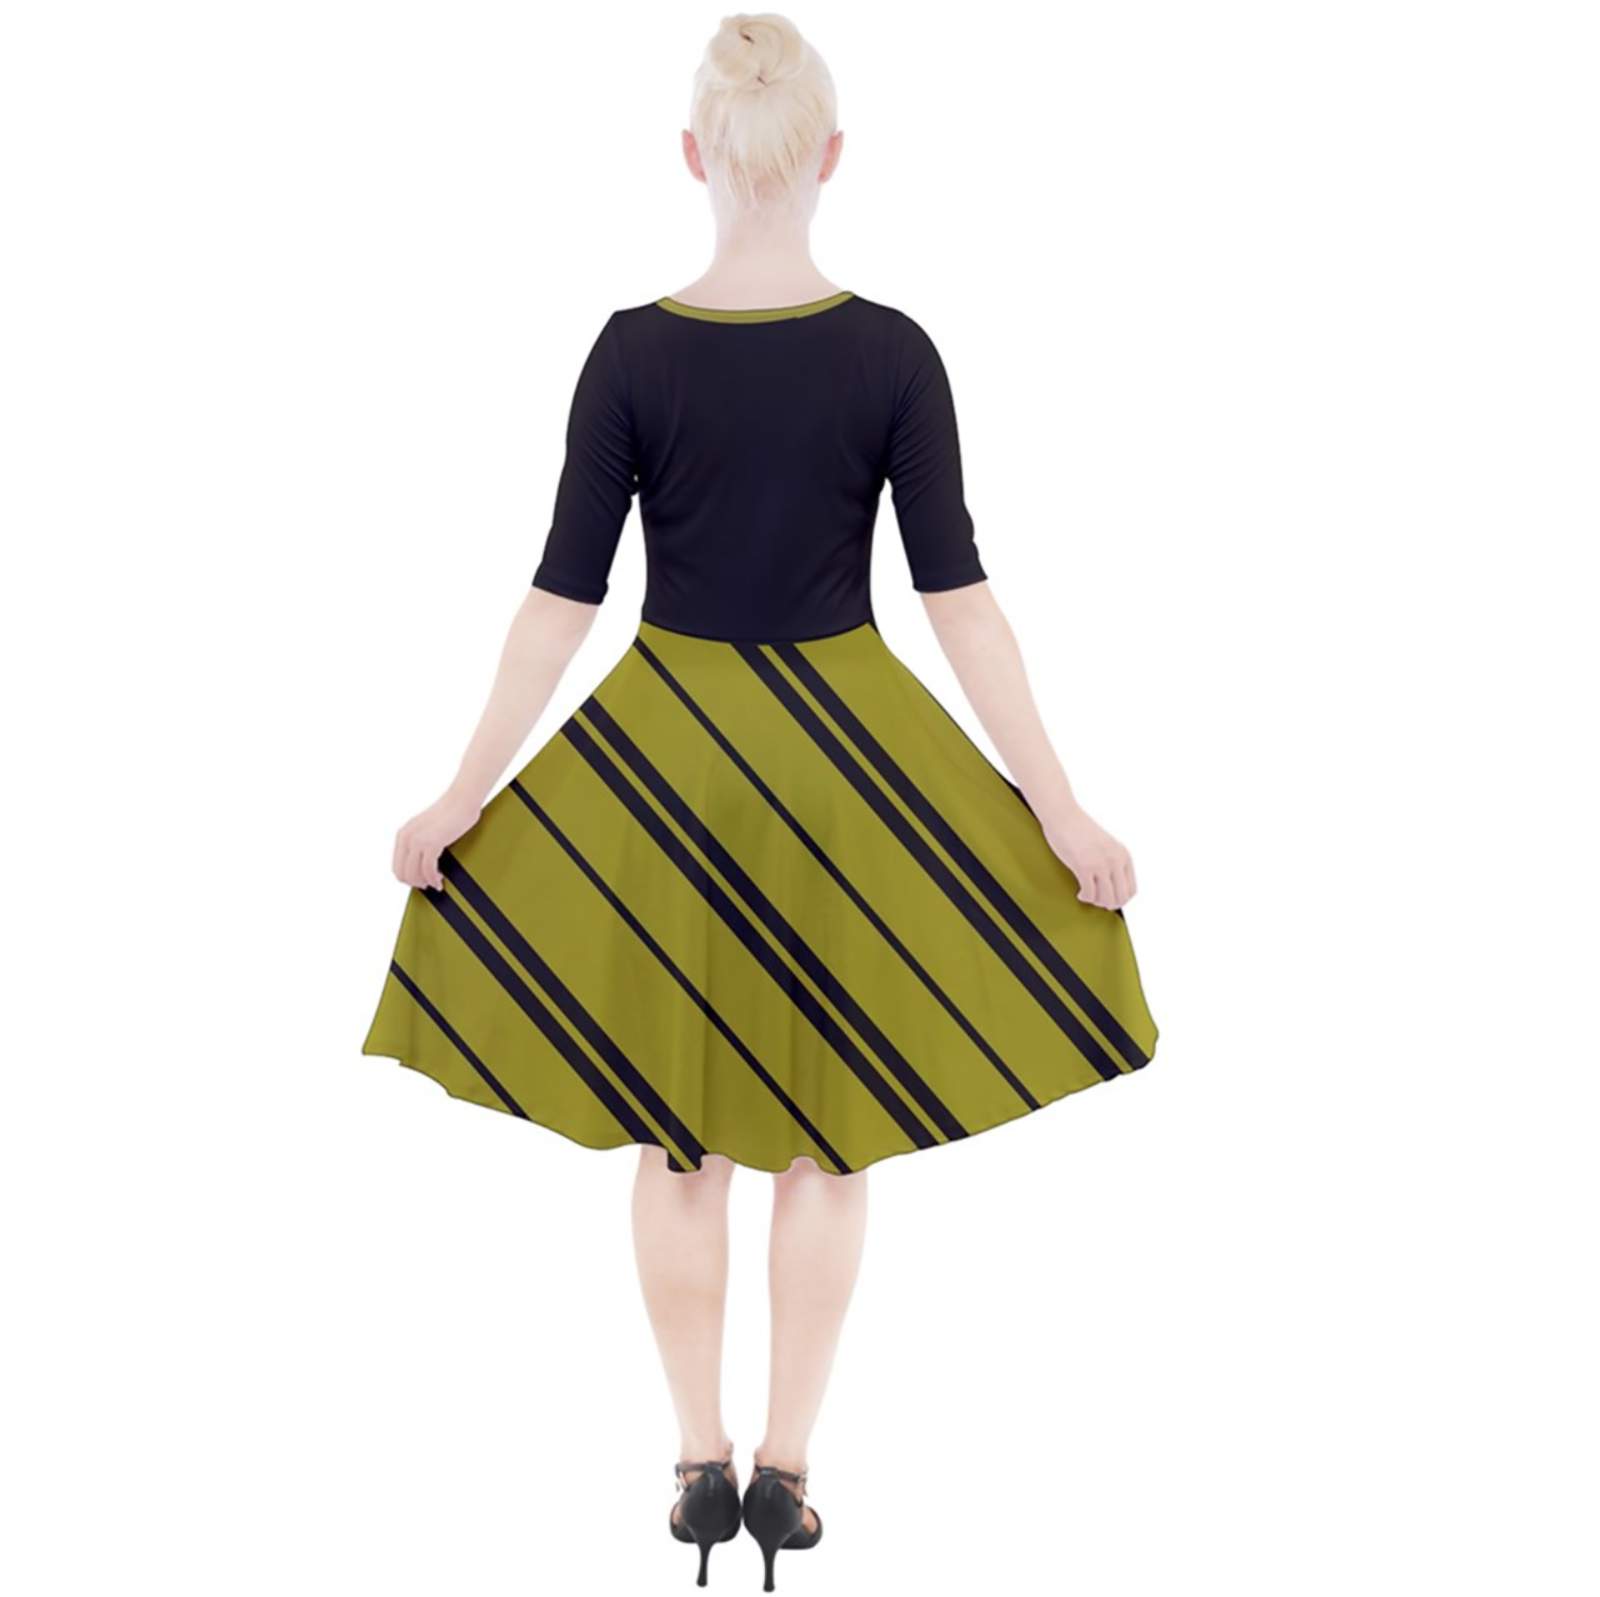 Owl (Yellow) Striped Dress - Quarter Sleeve A-Line Dress - Inspired by Hufflepuff